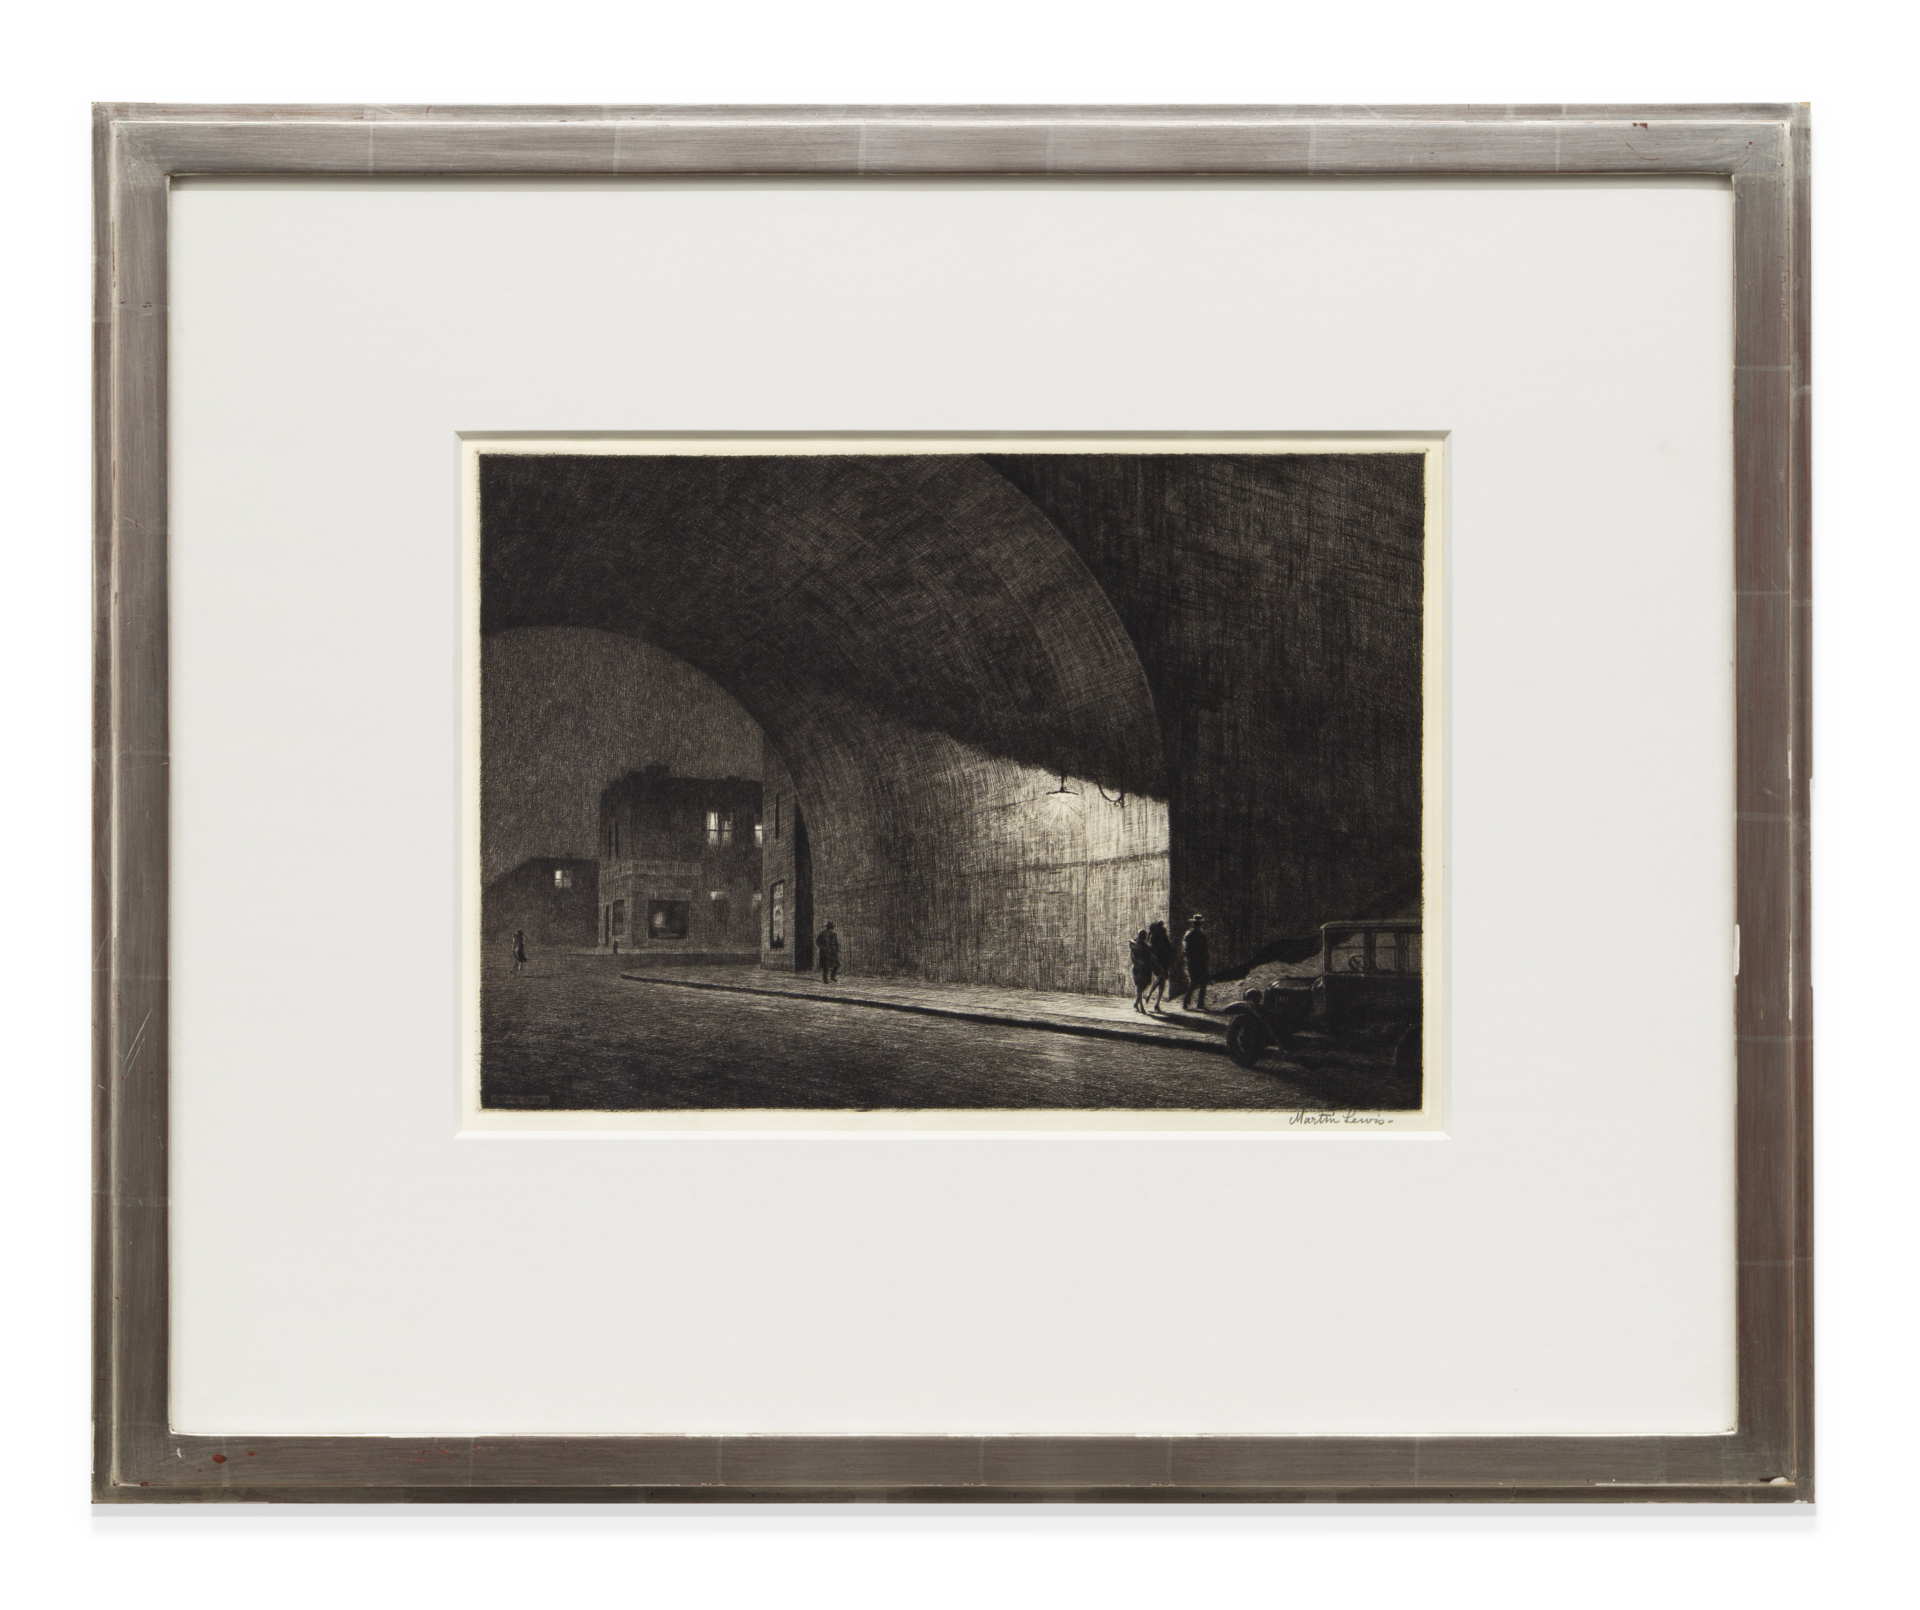 Martin Lewis Arch, Midnight, 1930 Drypoint Image Dimensions: 8 1/8 x 11 5/8 inches (20.6 x 29.5 cm) Paper Dimensions: 12 1/8 x 16 inches (30.8 x 40.6 cm) Framed Dimensions: 16 1/2 x 20 1/4 inches (41.9 x 51.4 cm) Edition of 99